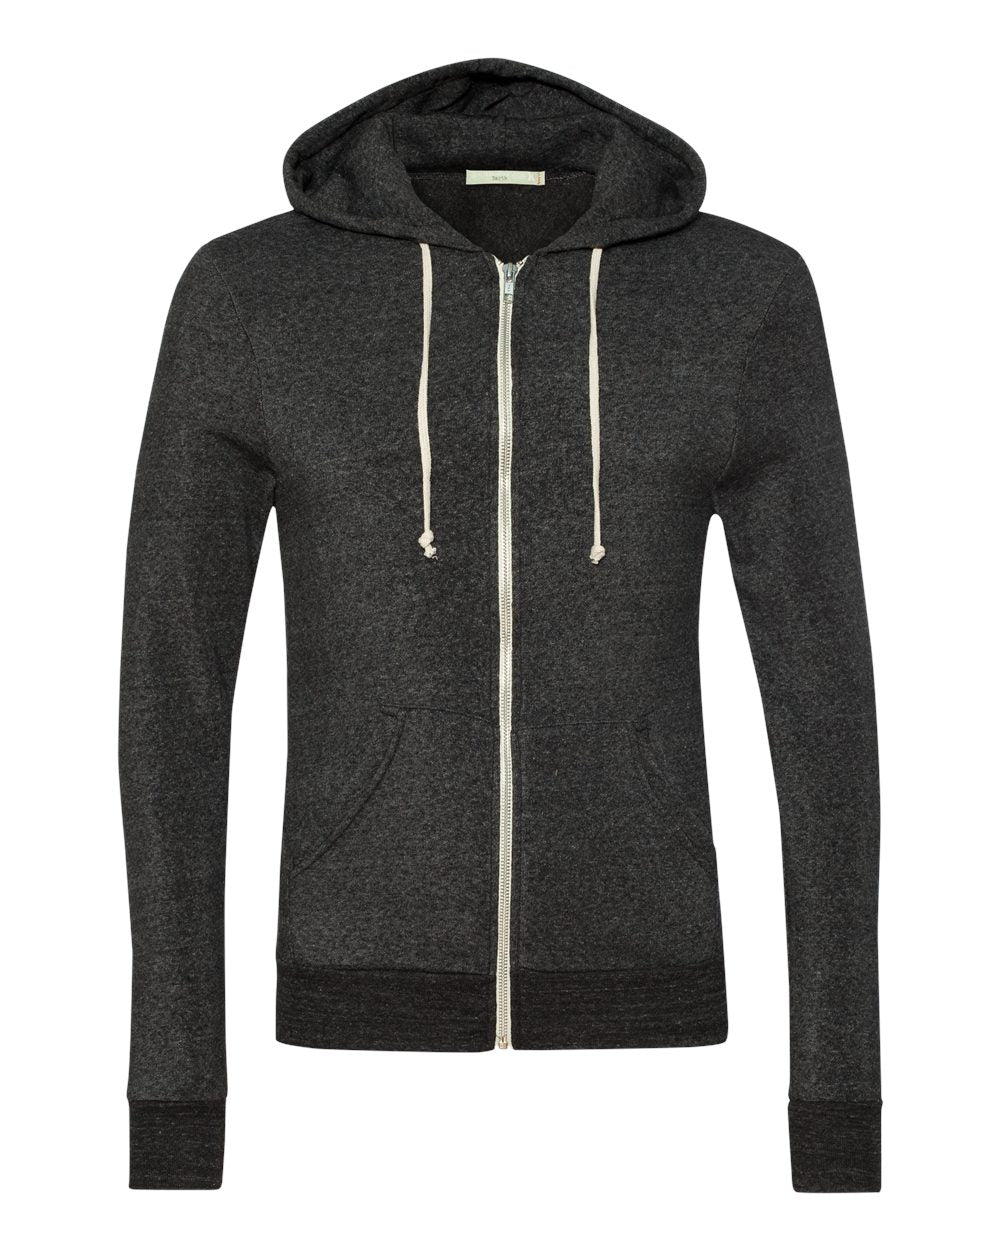 Alternative Rocky Eco-Fleece Full-Zip Hooded Sweatshirt 9590 #color_Eco Black